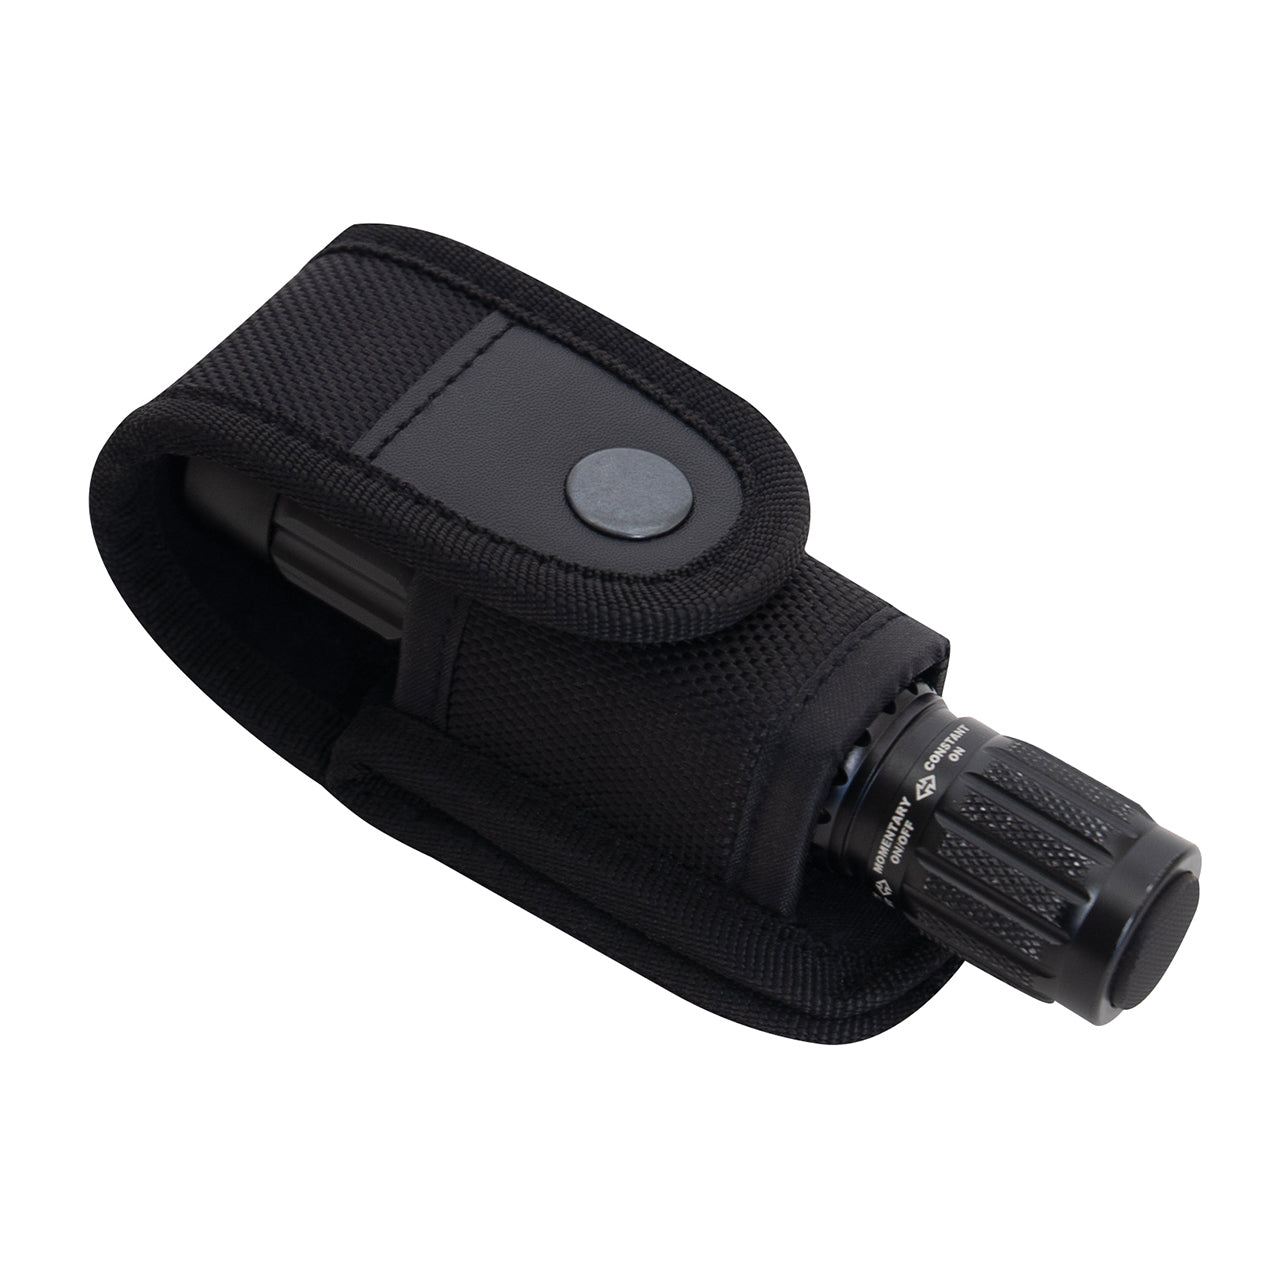 Easily add a flashlight onto your duty belt with our Enhanced Universal Flashlight Holder. www.defenceqstore.com.au